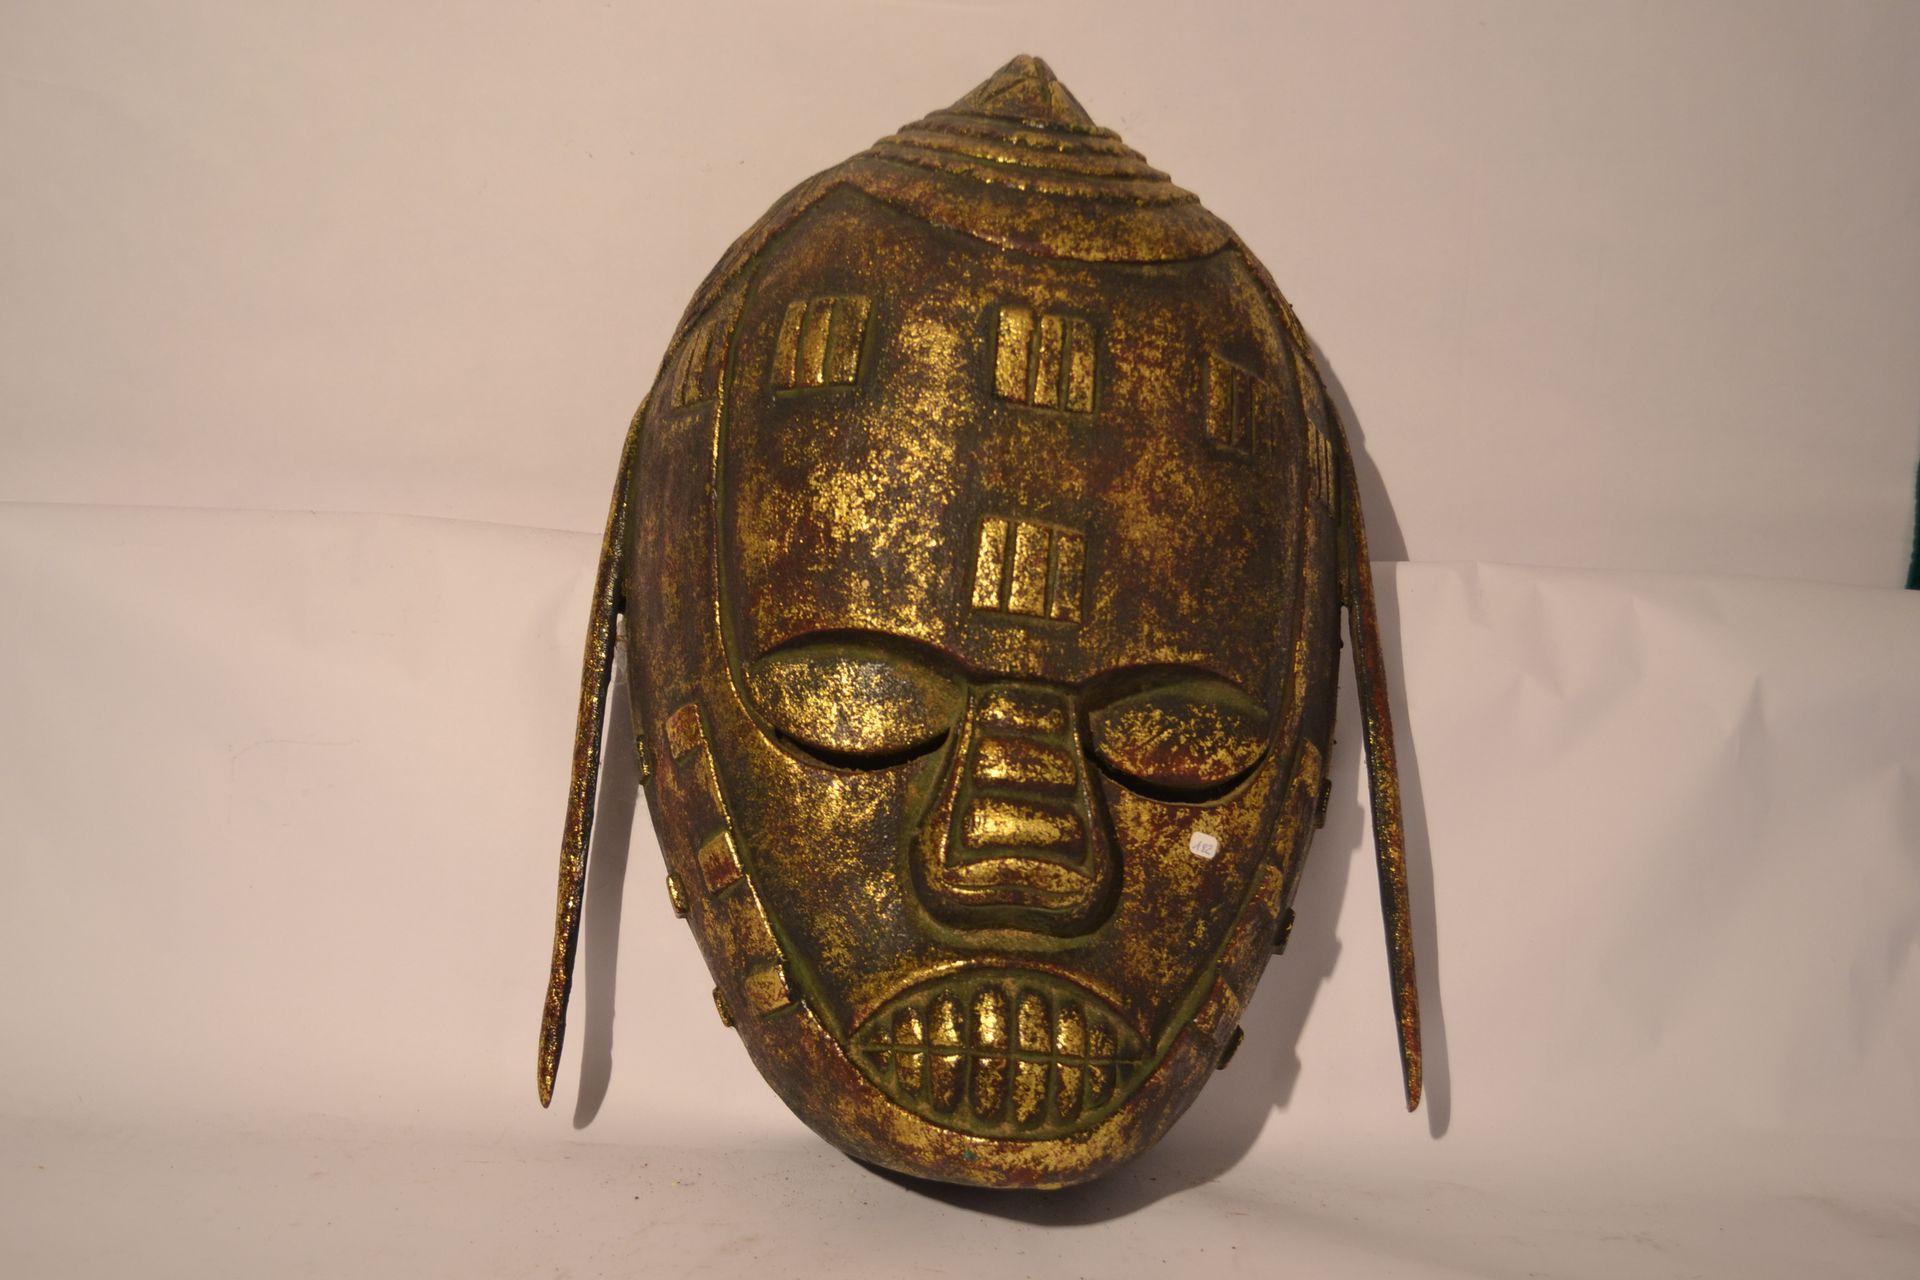 Null 原始的面具。

黑色和镀金的异国木材

 58 x 40 x 20厘米

重量：4公斤